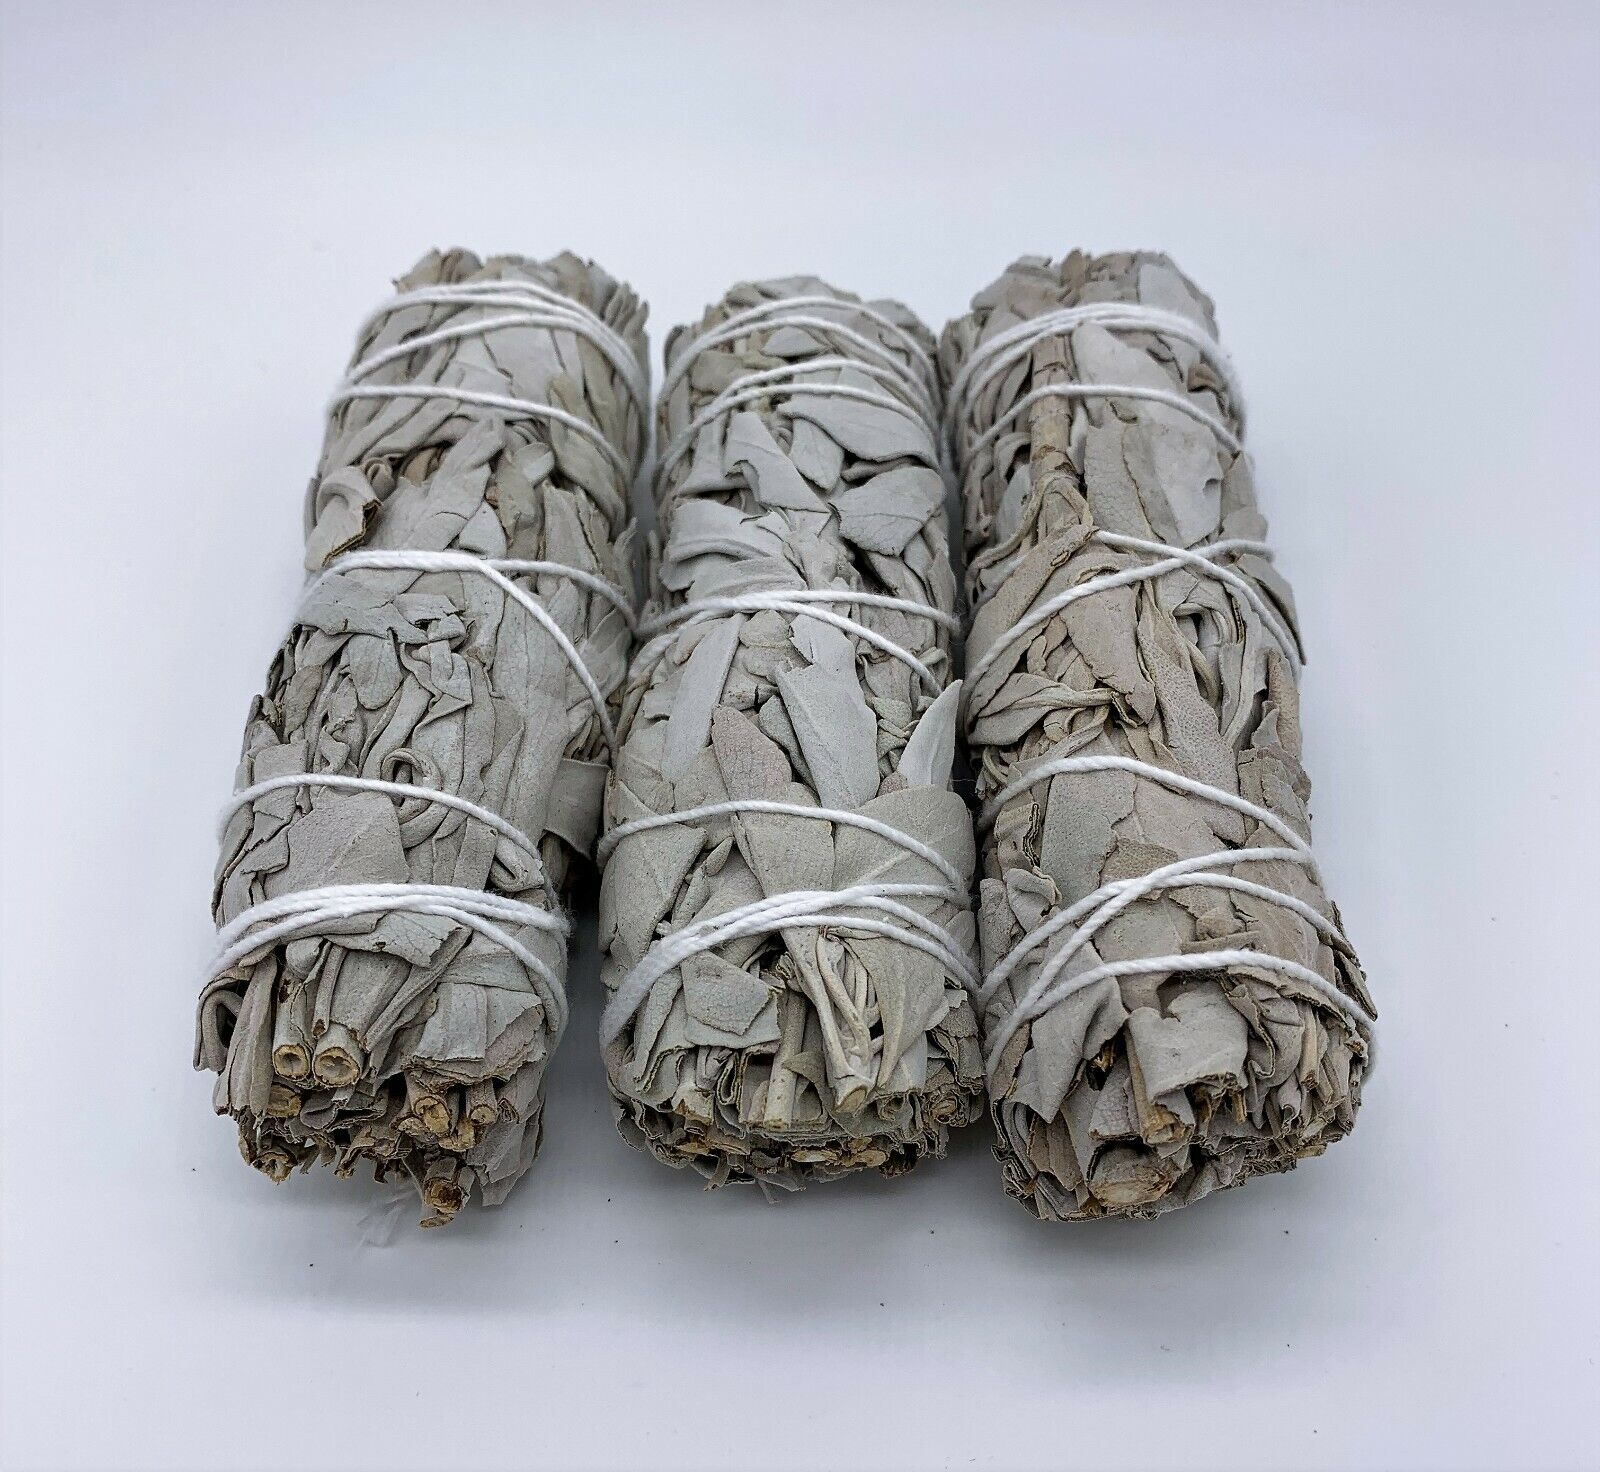 3X White Sage Smudge Sticks / Wands 4 - 5 